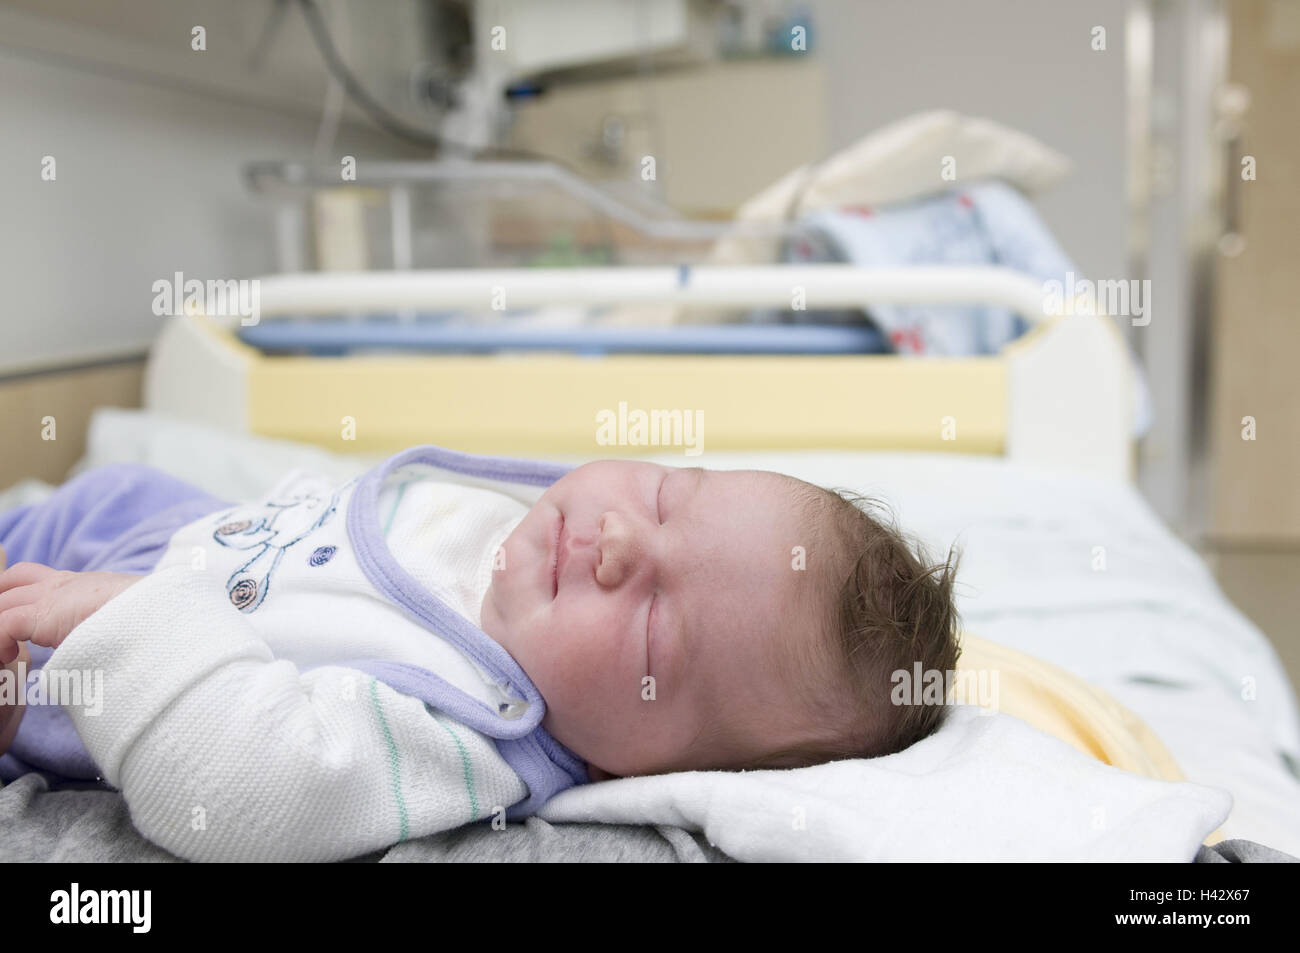 Clinics, bed, newborn child, sleep, Stock Photo